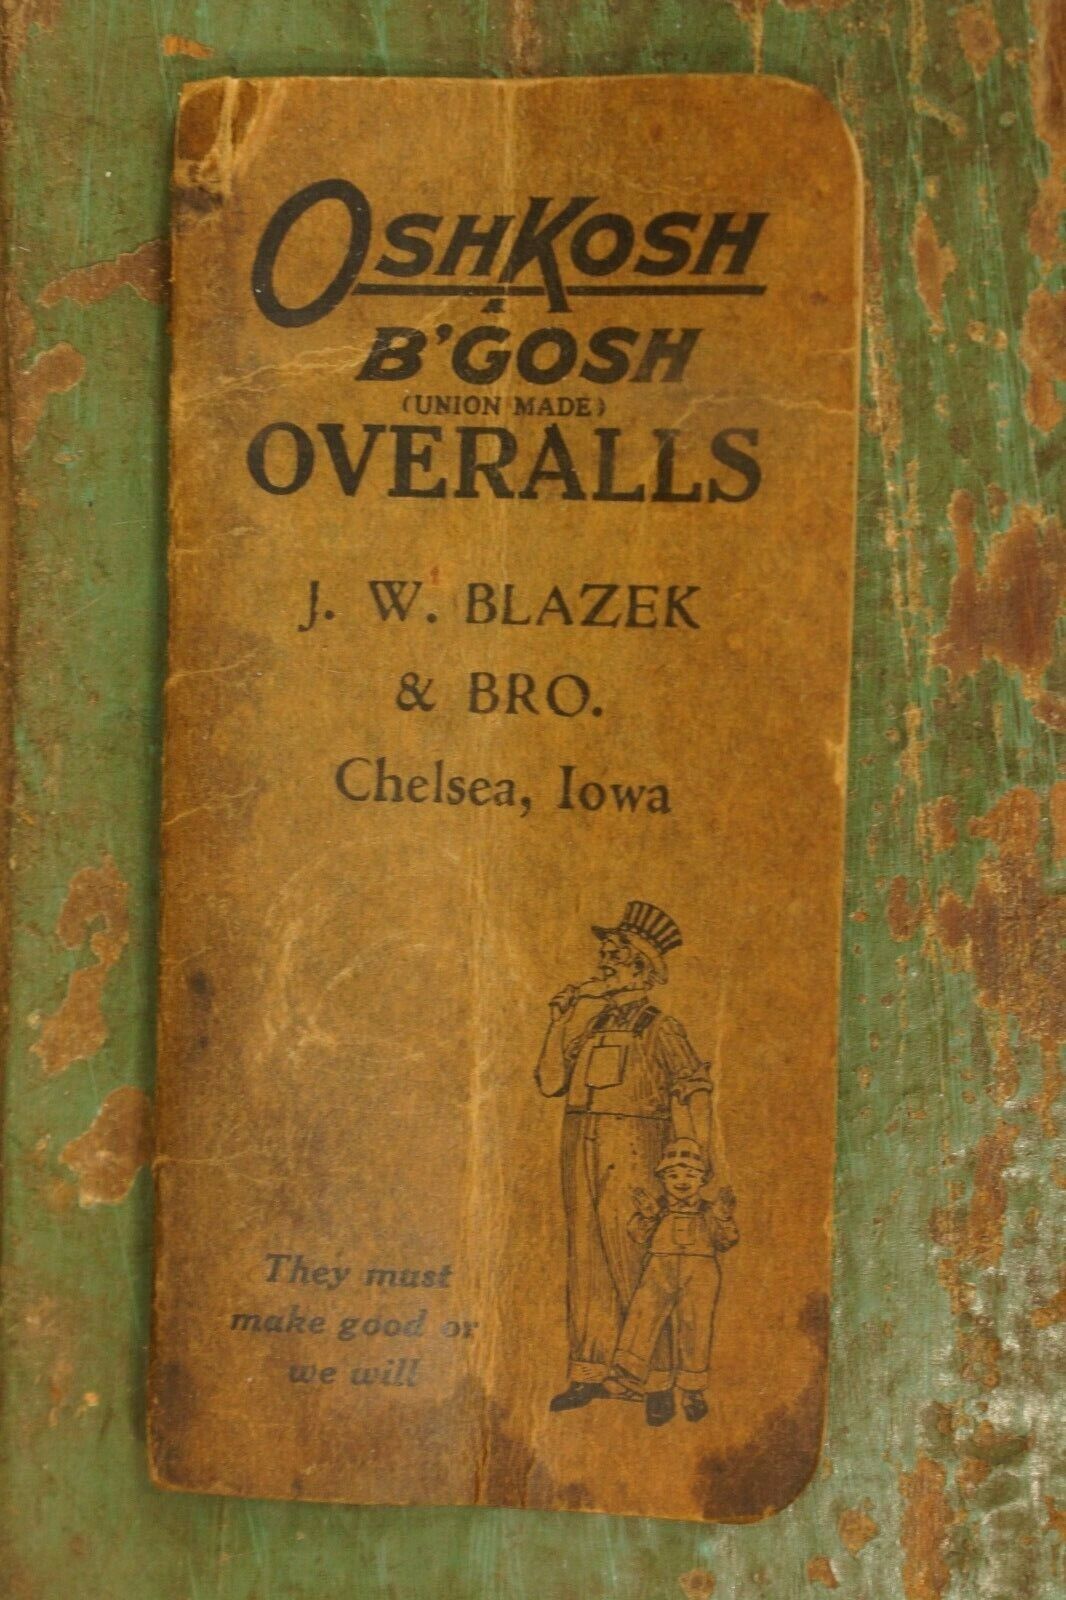 Antique Oshkosh B;Gosh Overalls J. W. Blazek & Bro. Chelsea IA Advertising Book 